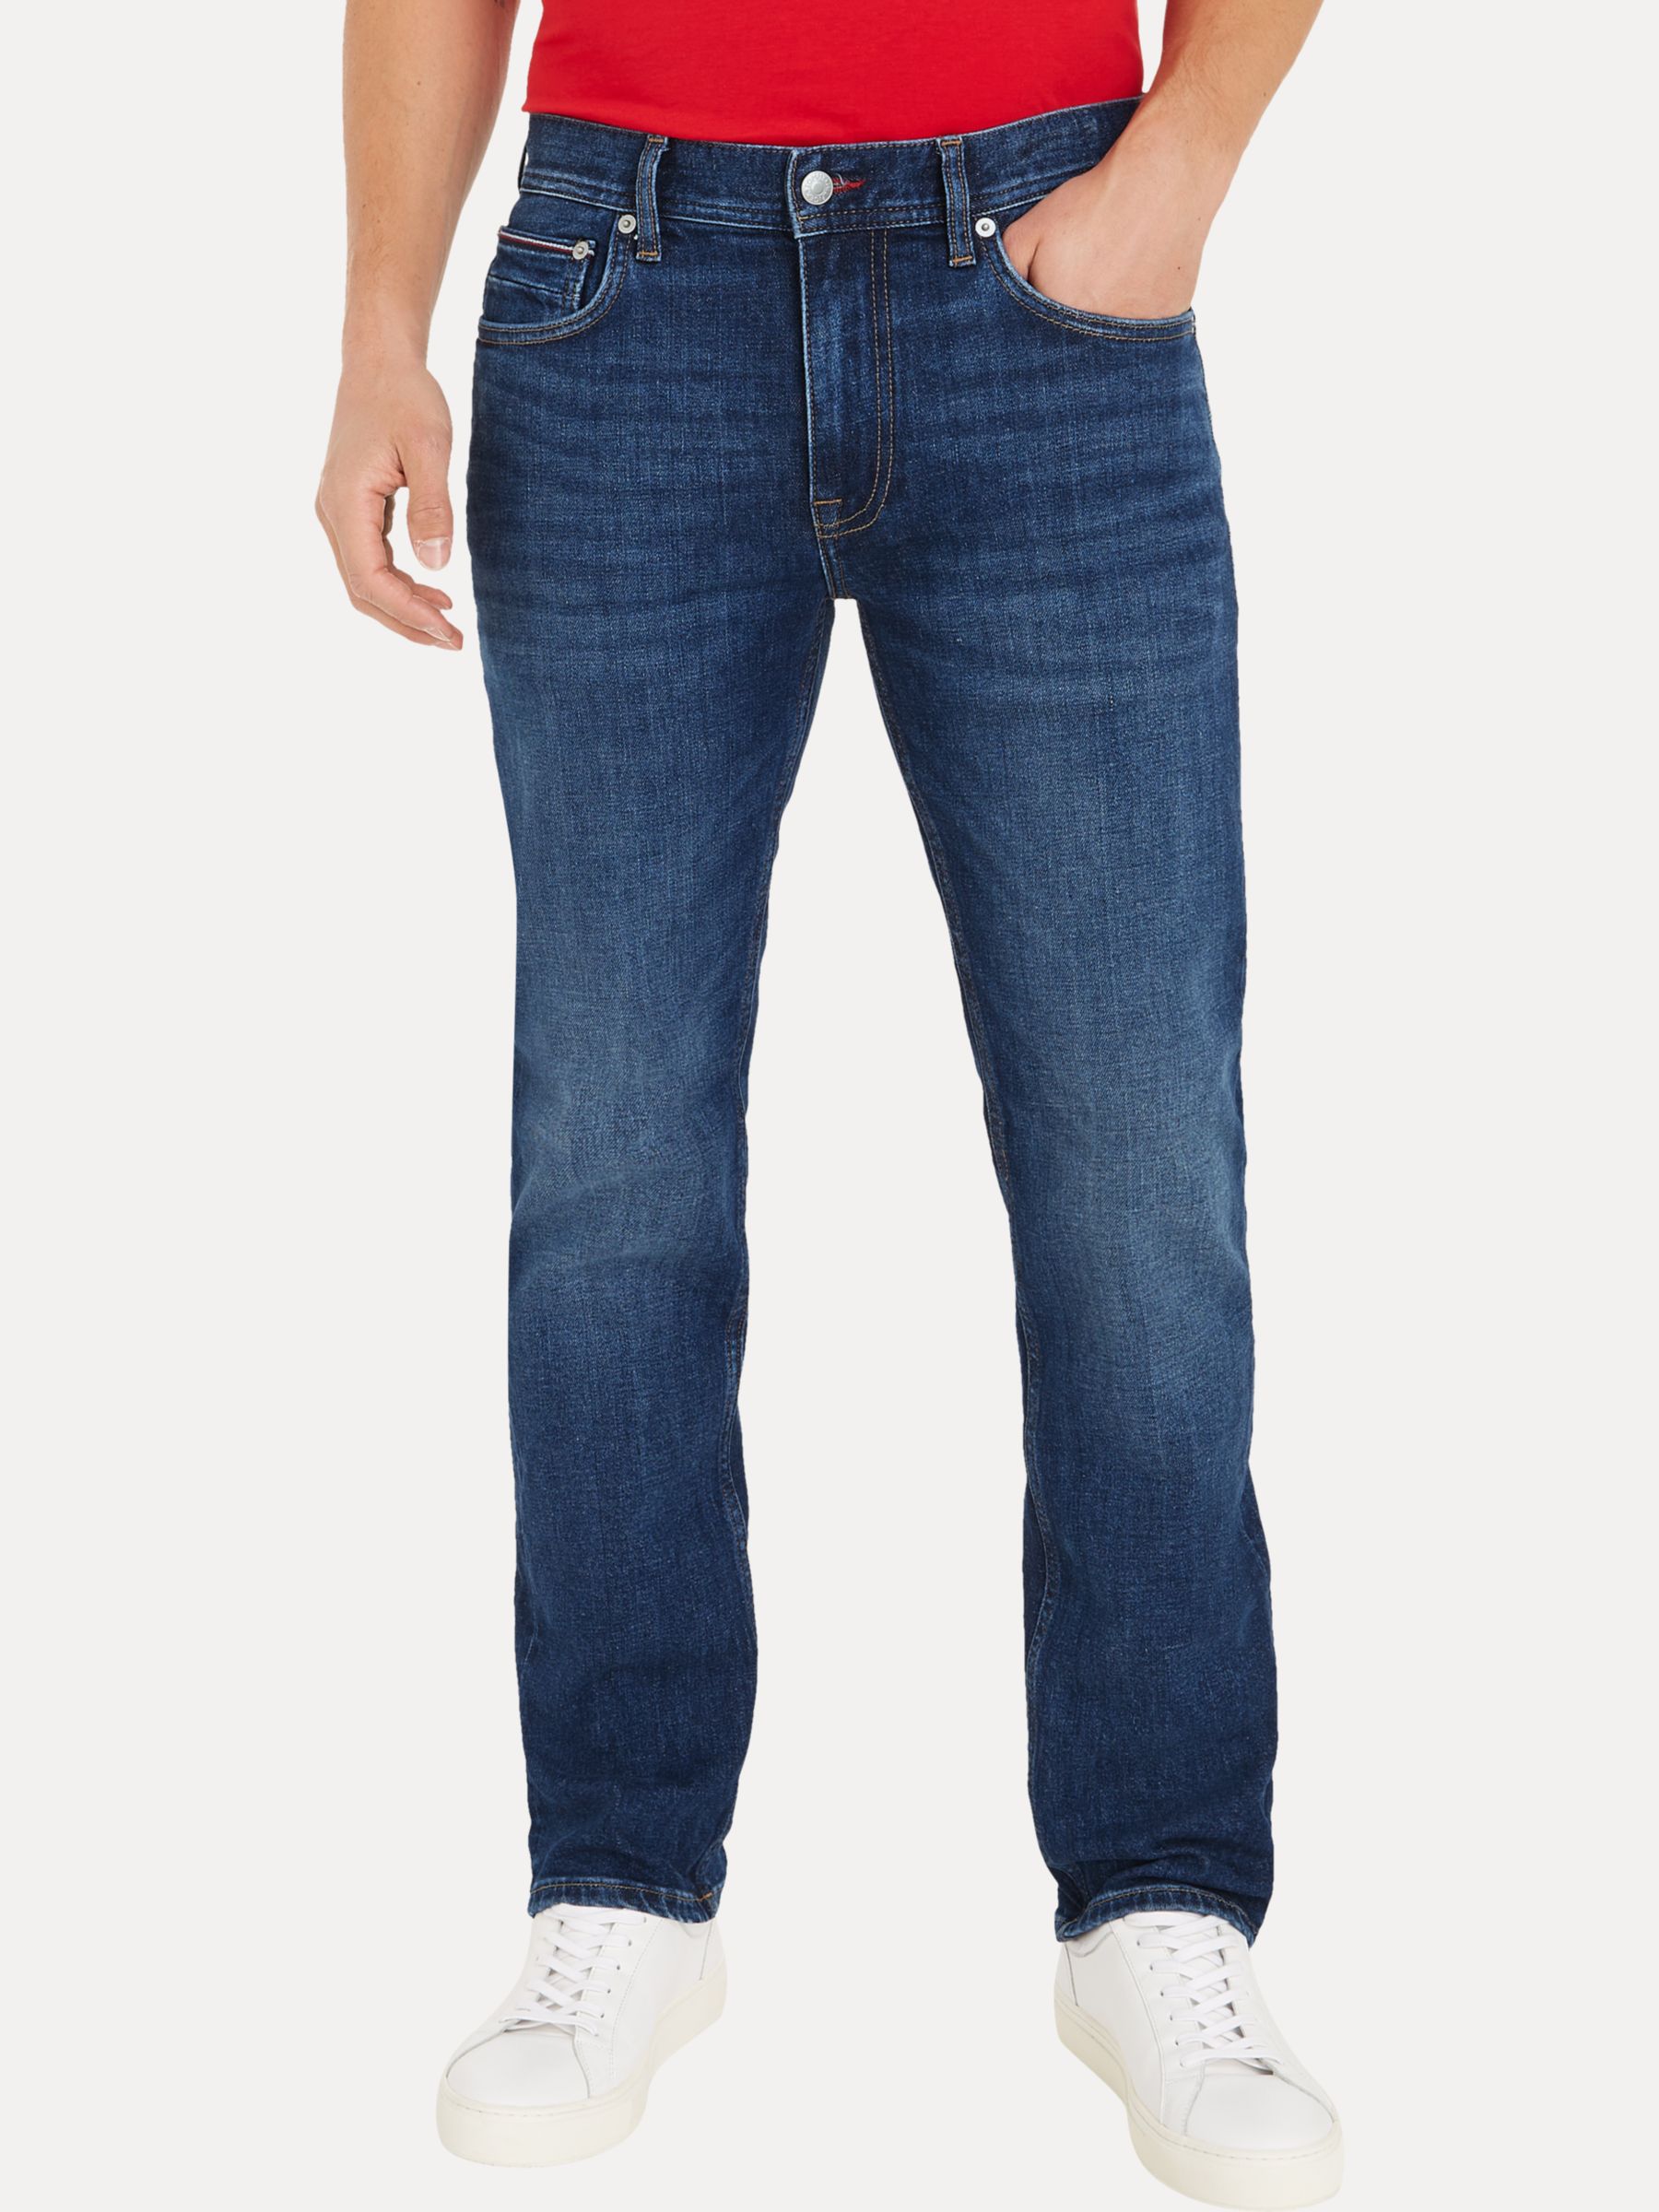 Tommy Hilfiger Madison Jeans, Indigo at John Lewis & Partners